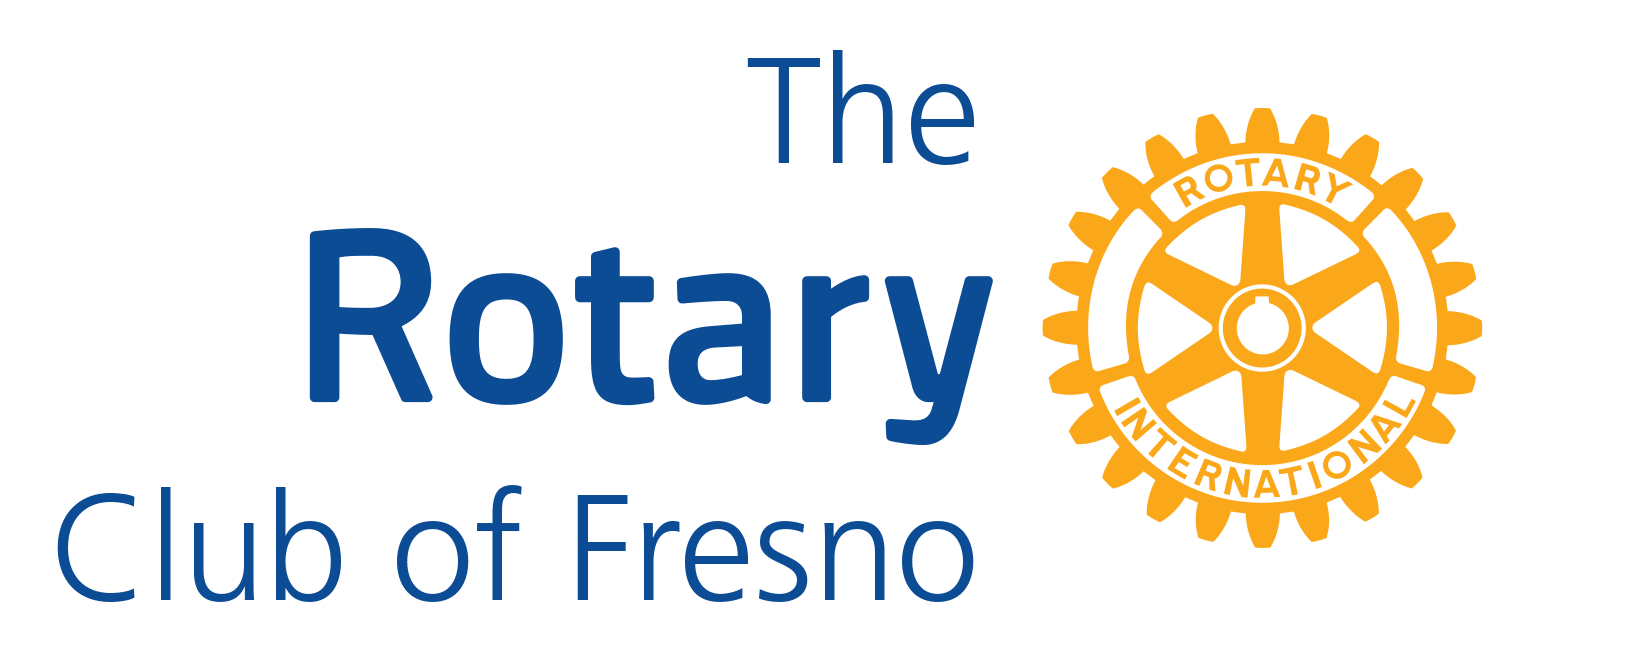 Rotary Club of Fresno